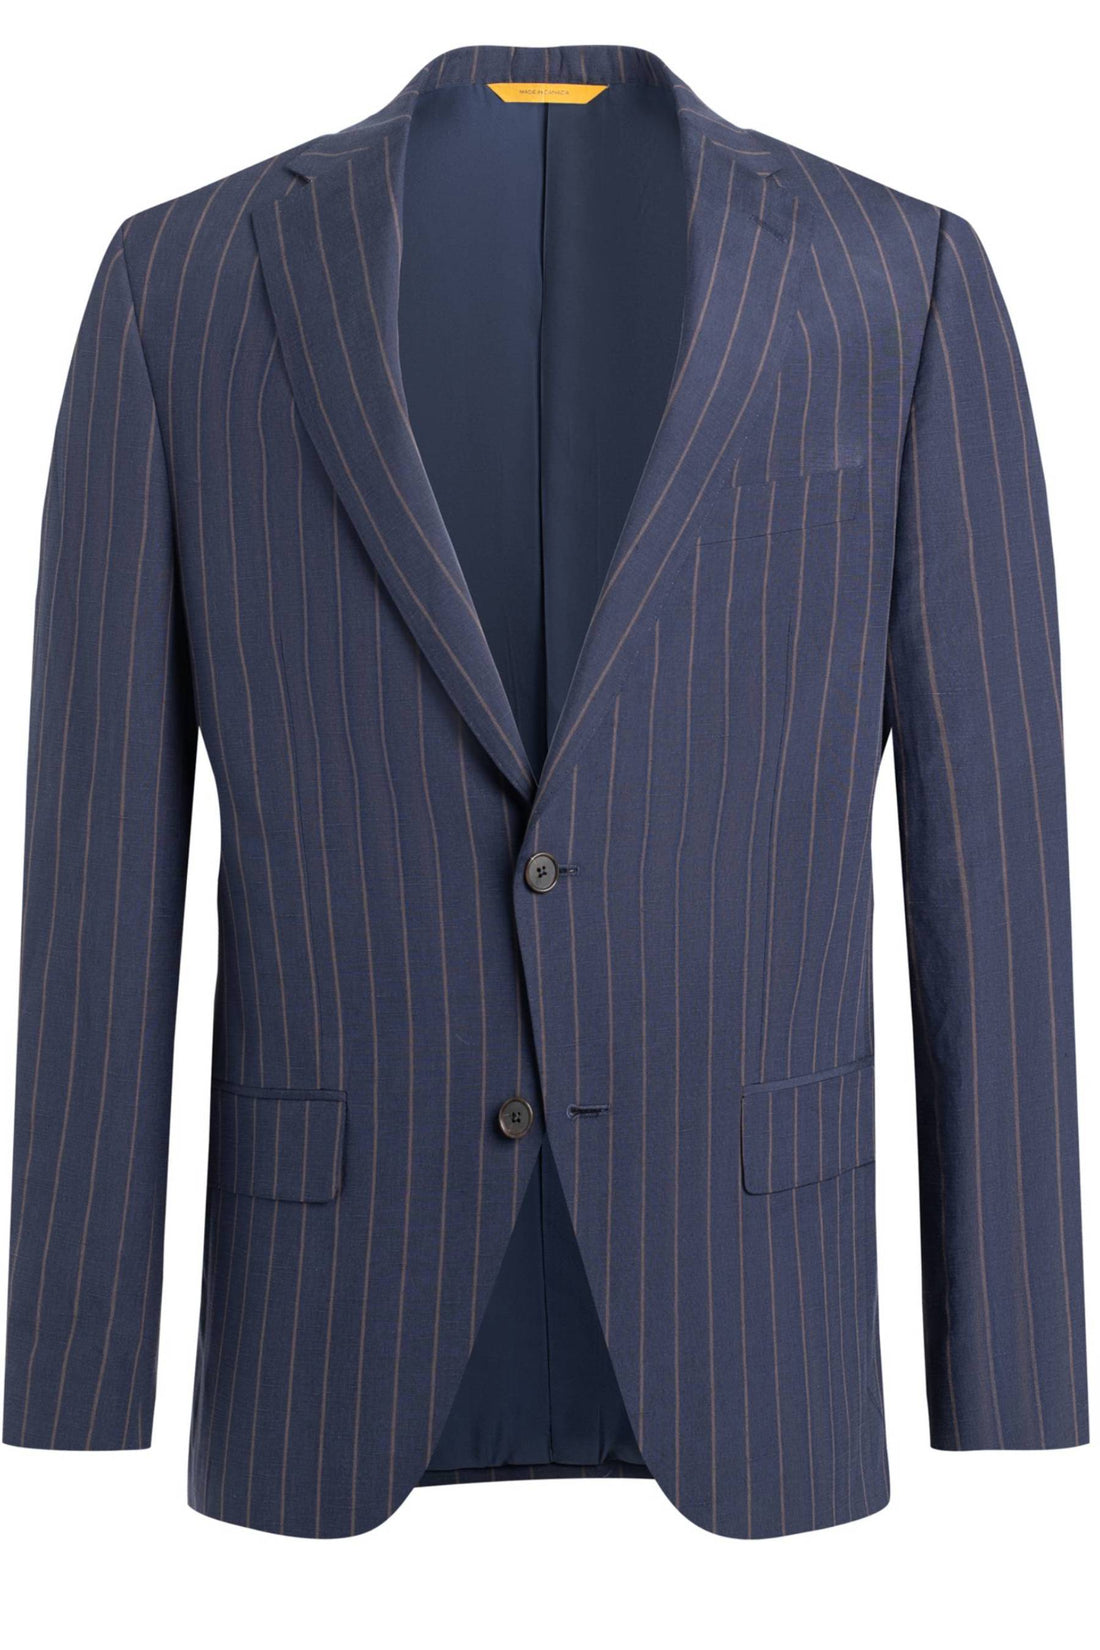 Heritage Gold Dark Blue Stripe Silk Linen Suit Front Jacket